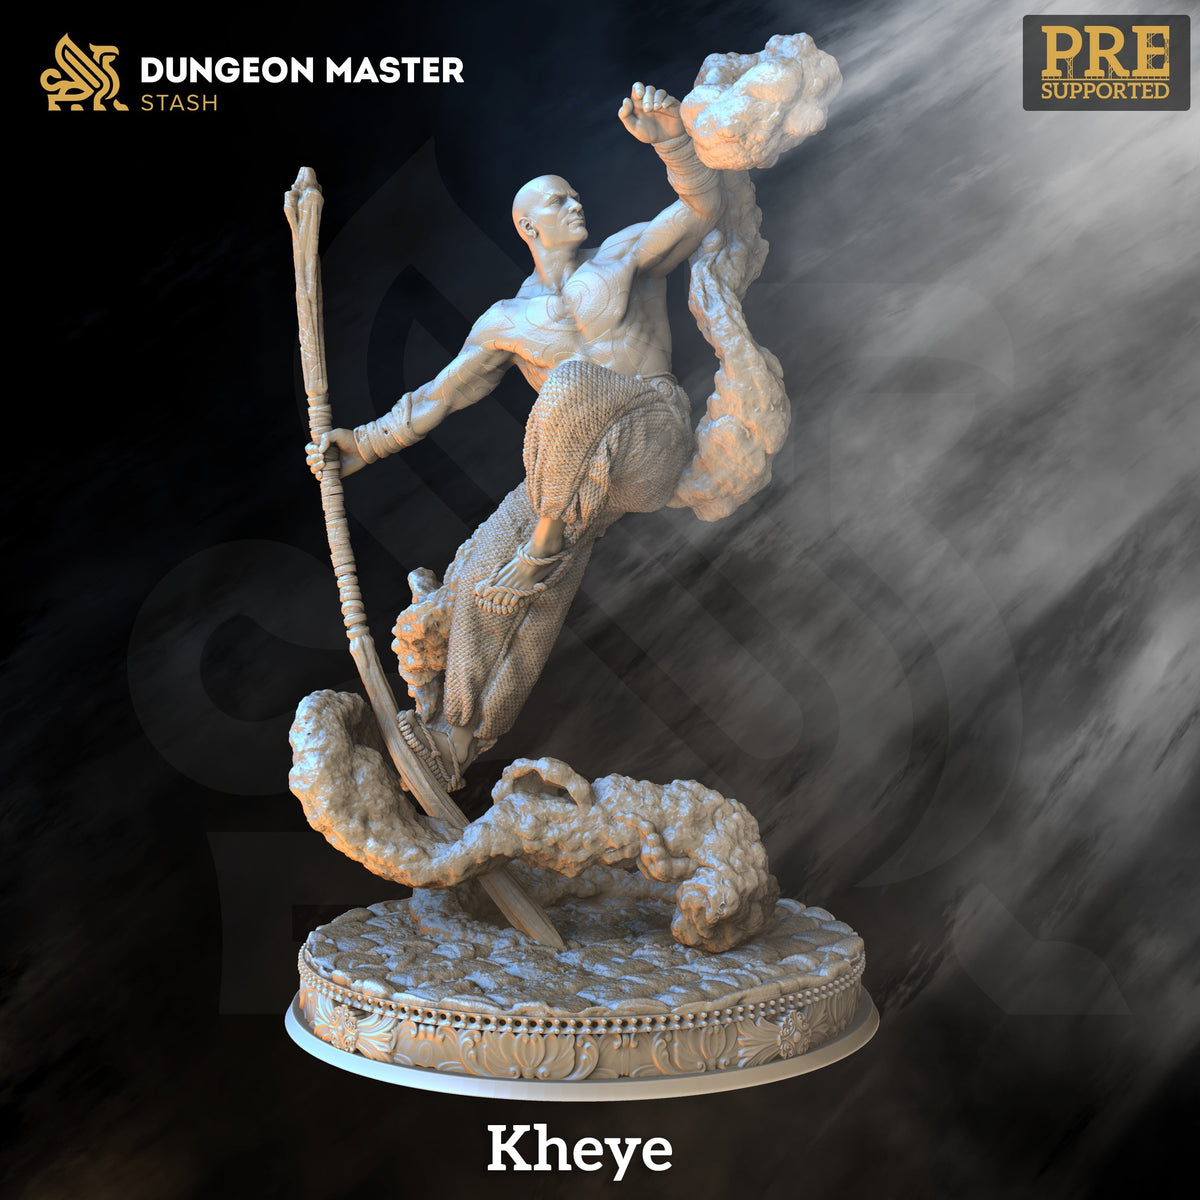 Kheye - The Printable Dragon